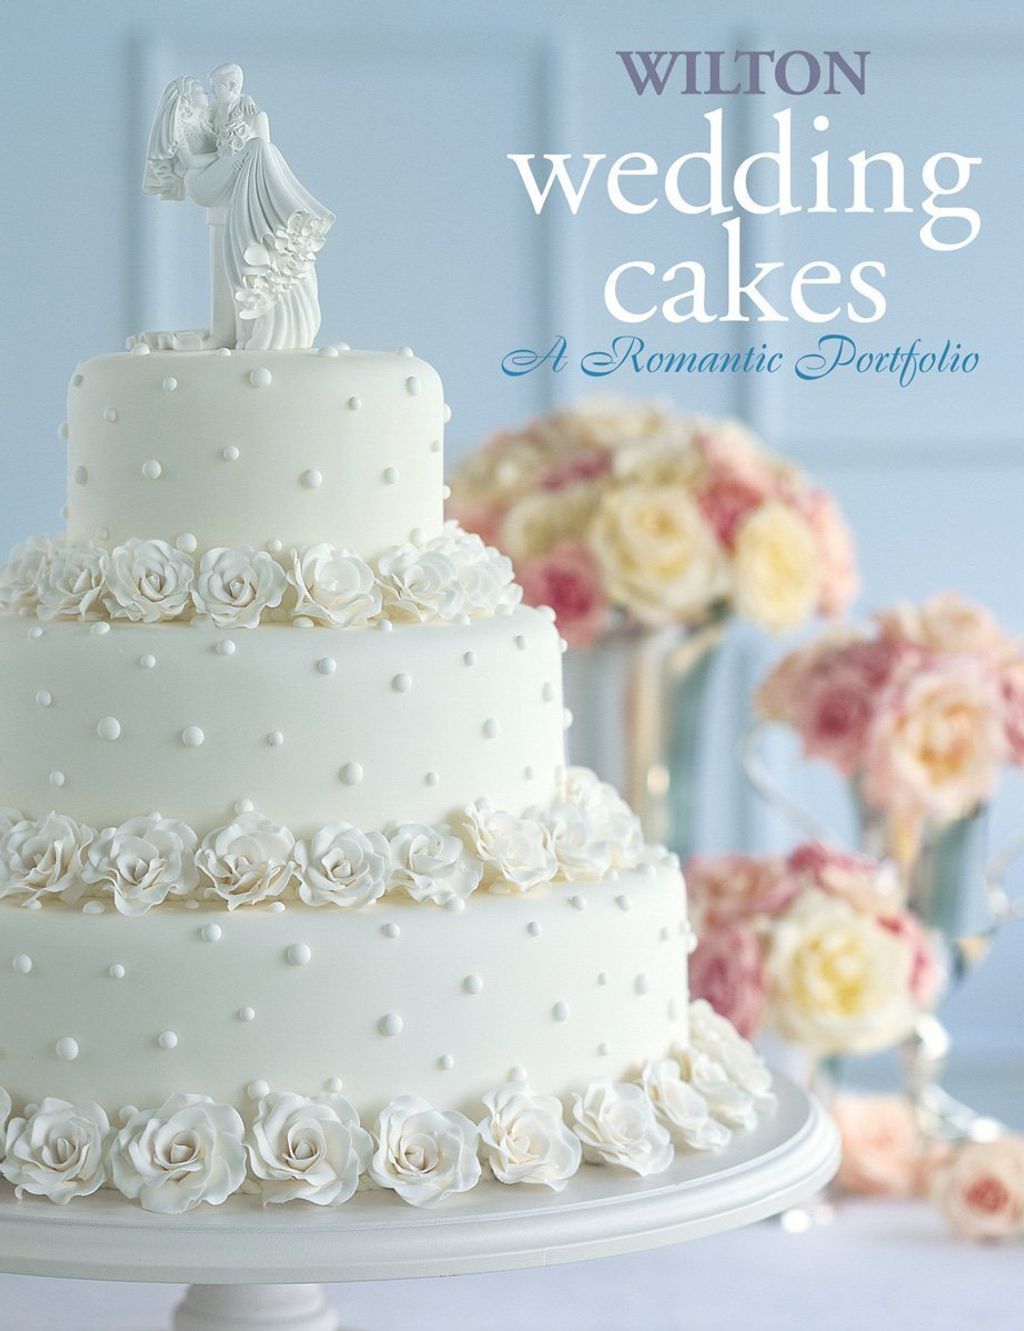 902-907Wilton Wedding Cakes , A Romantic Portfolio.jpg